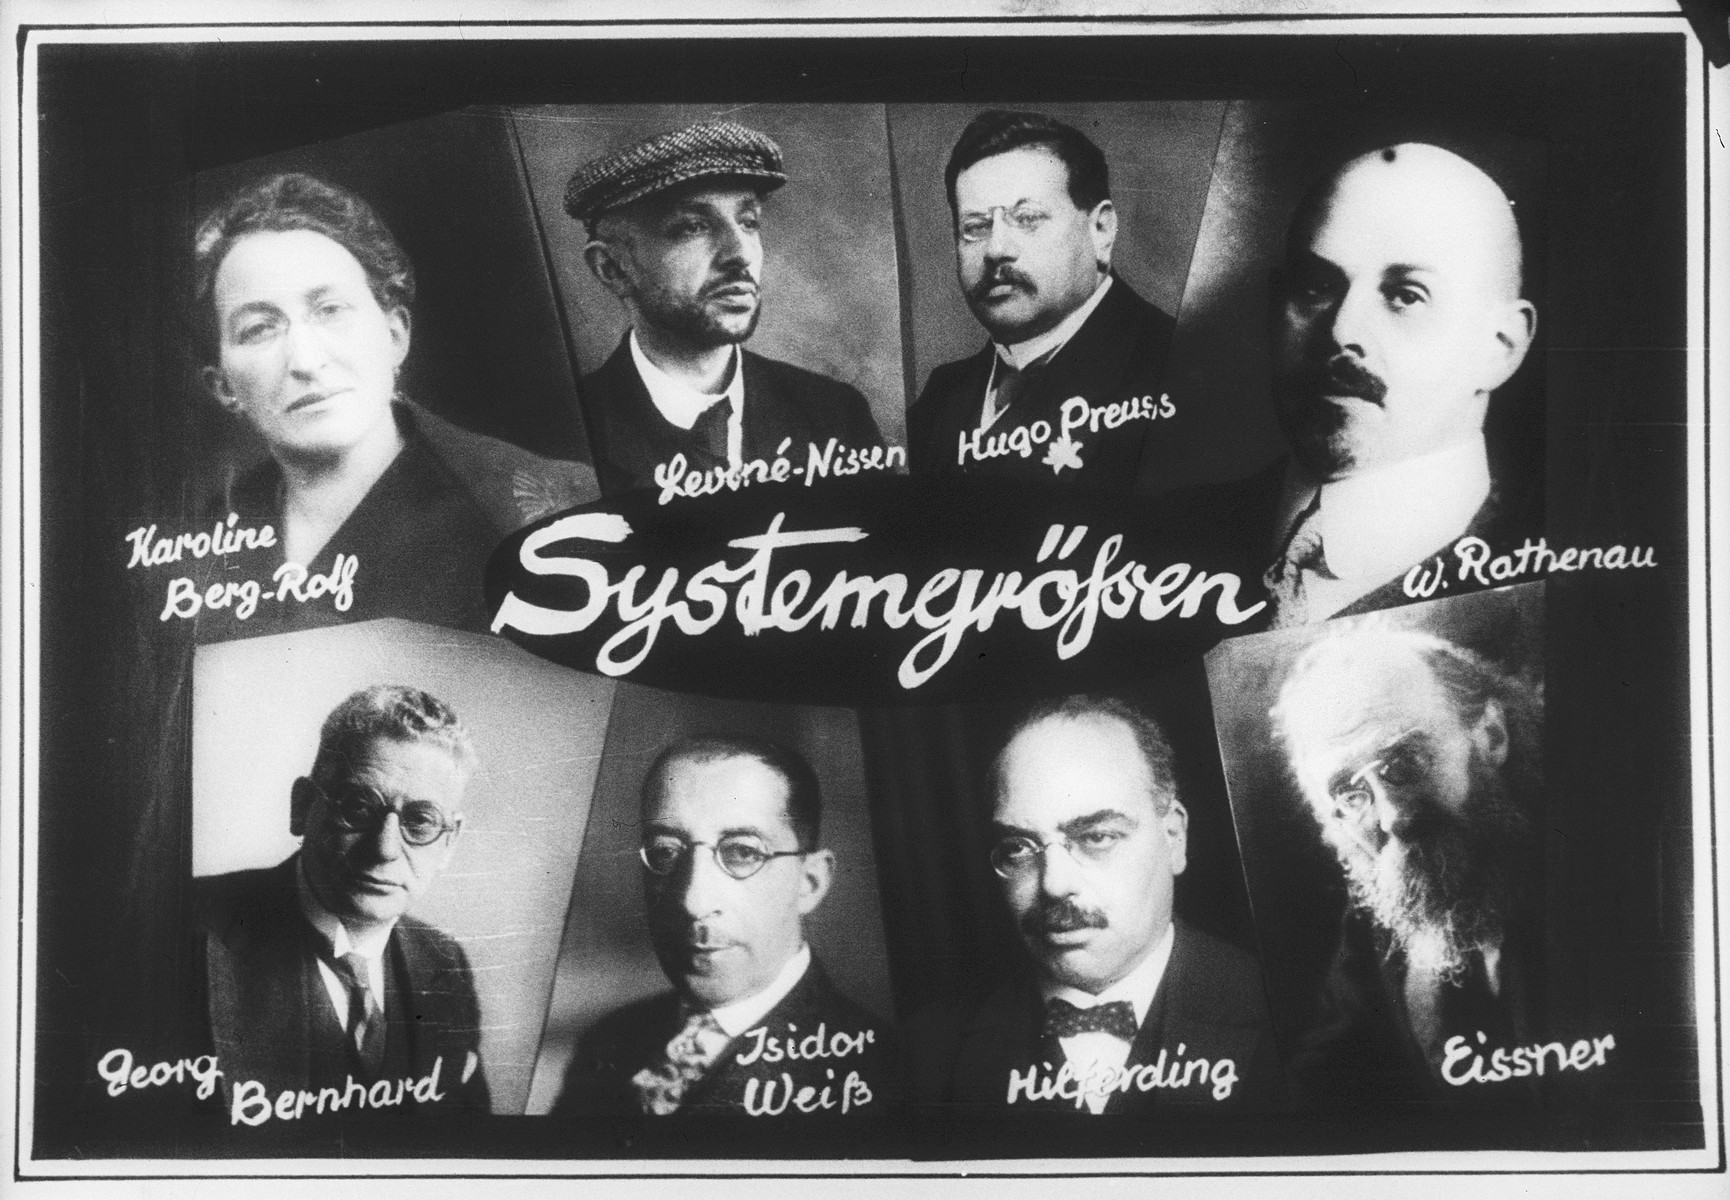 Nazi propaganda depicting prominent Jewish figures